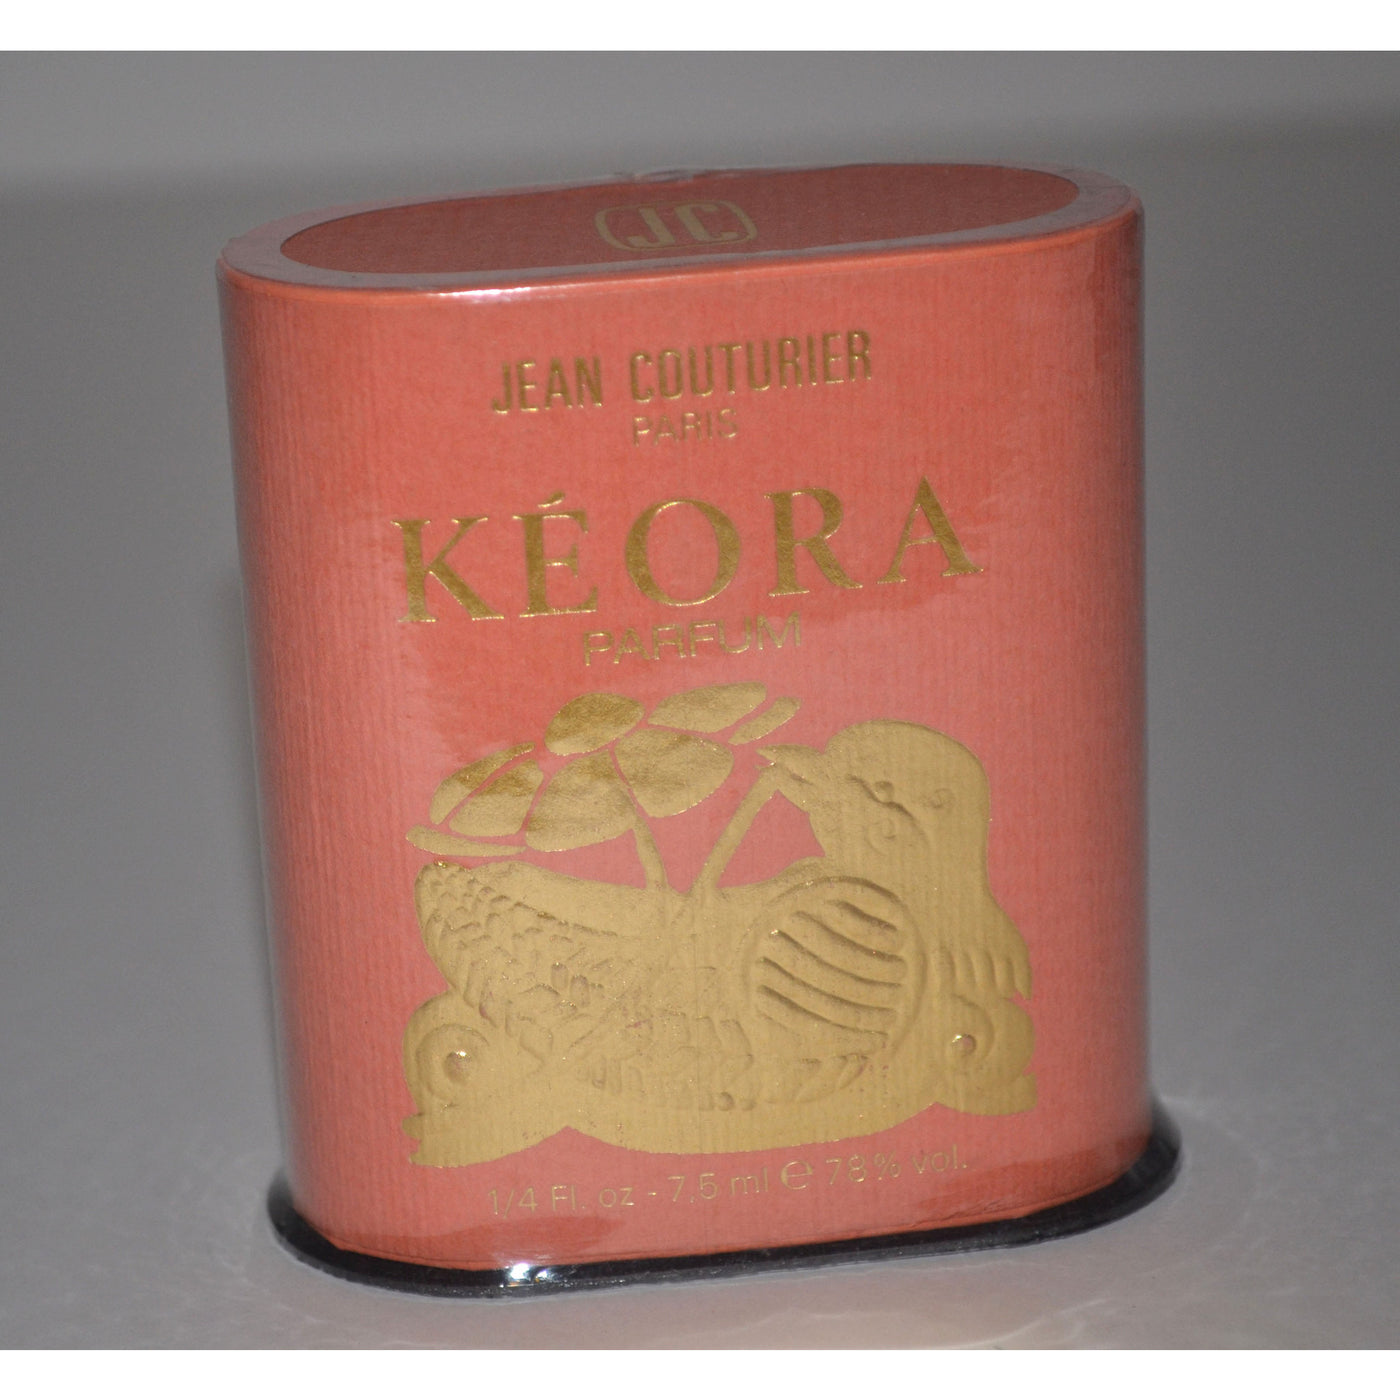 Vintage Keora Parfum By Jean Couturier